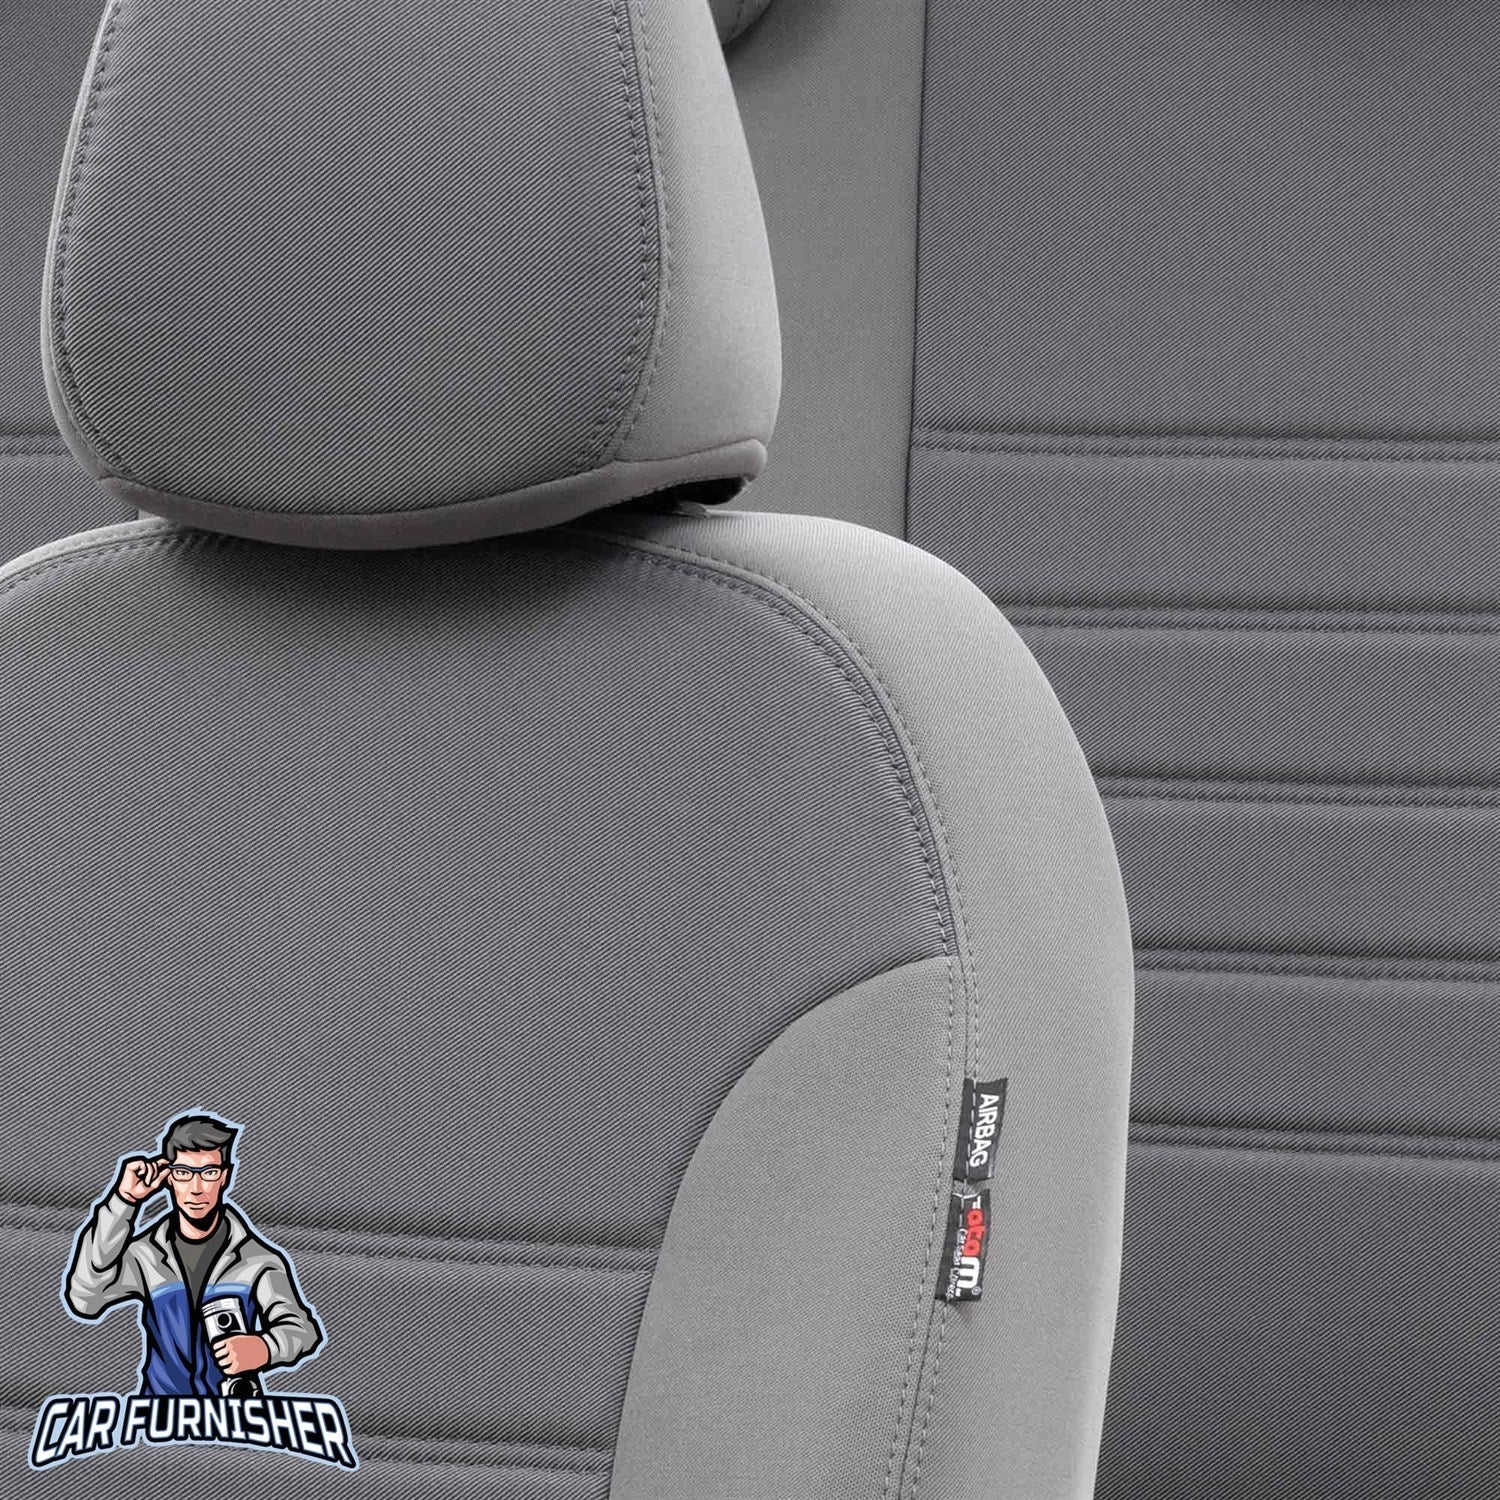 Hyundai H1 Seat Covers Original Jacquard Design Gray Jacquard Fabric